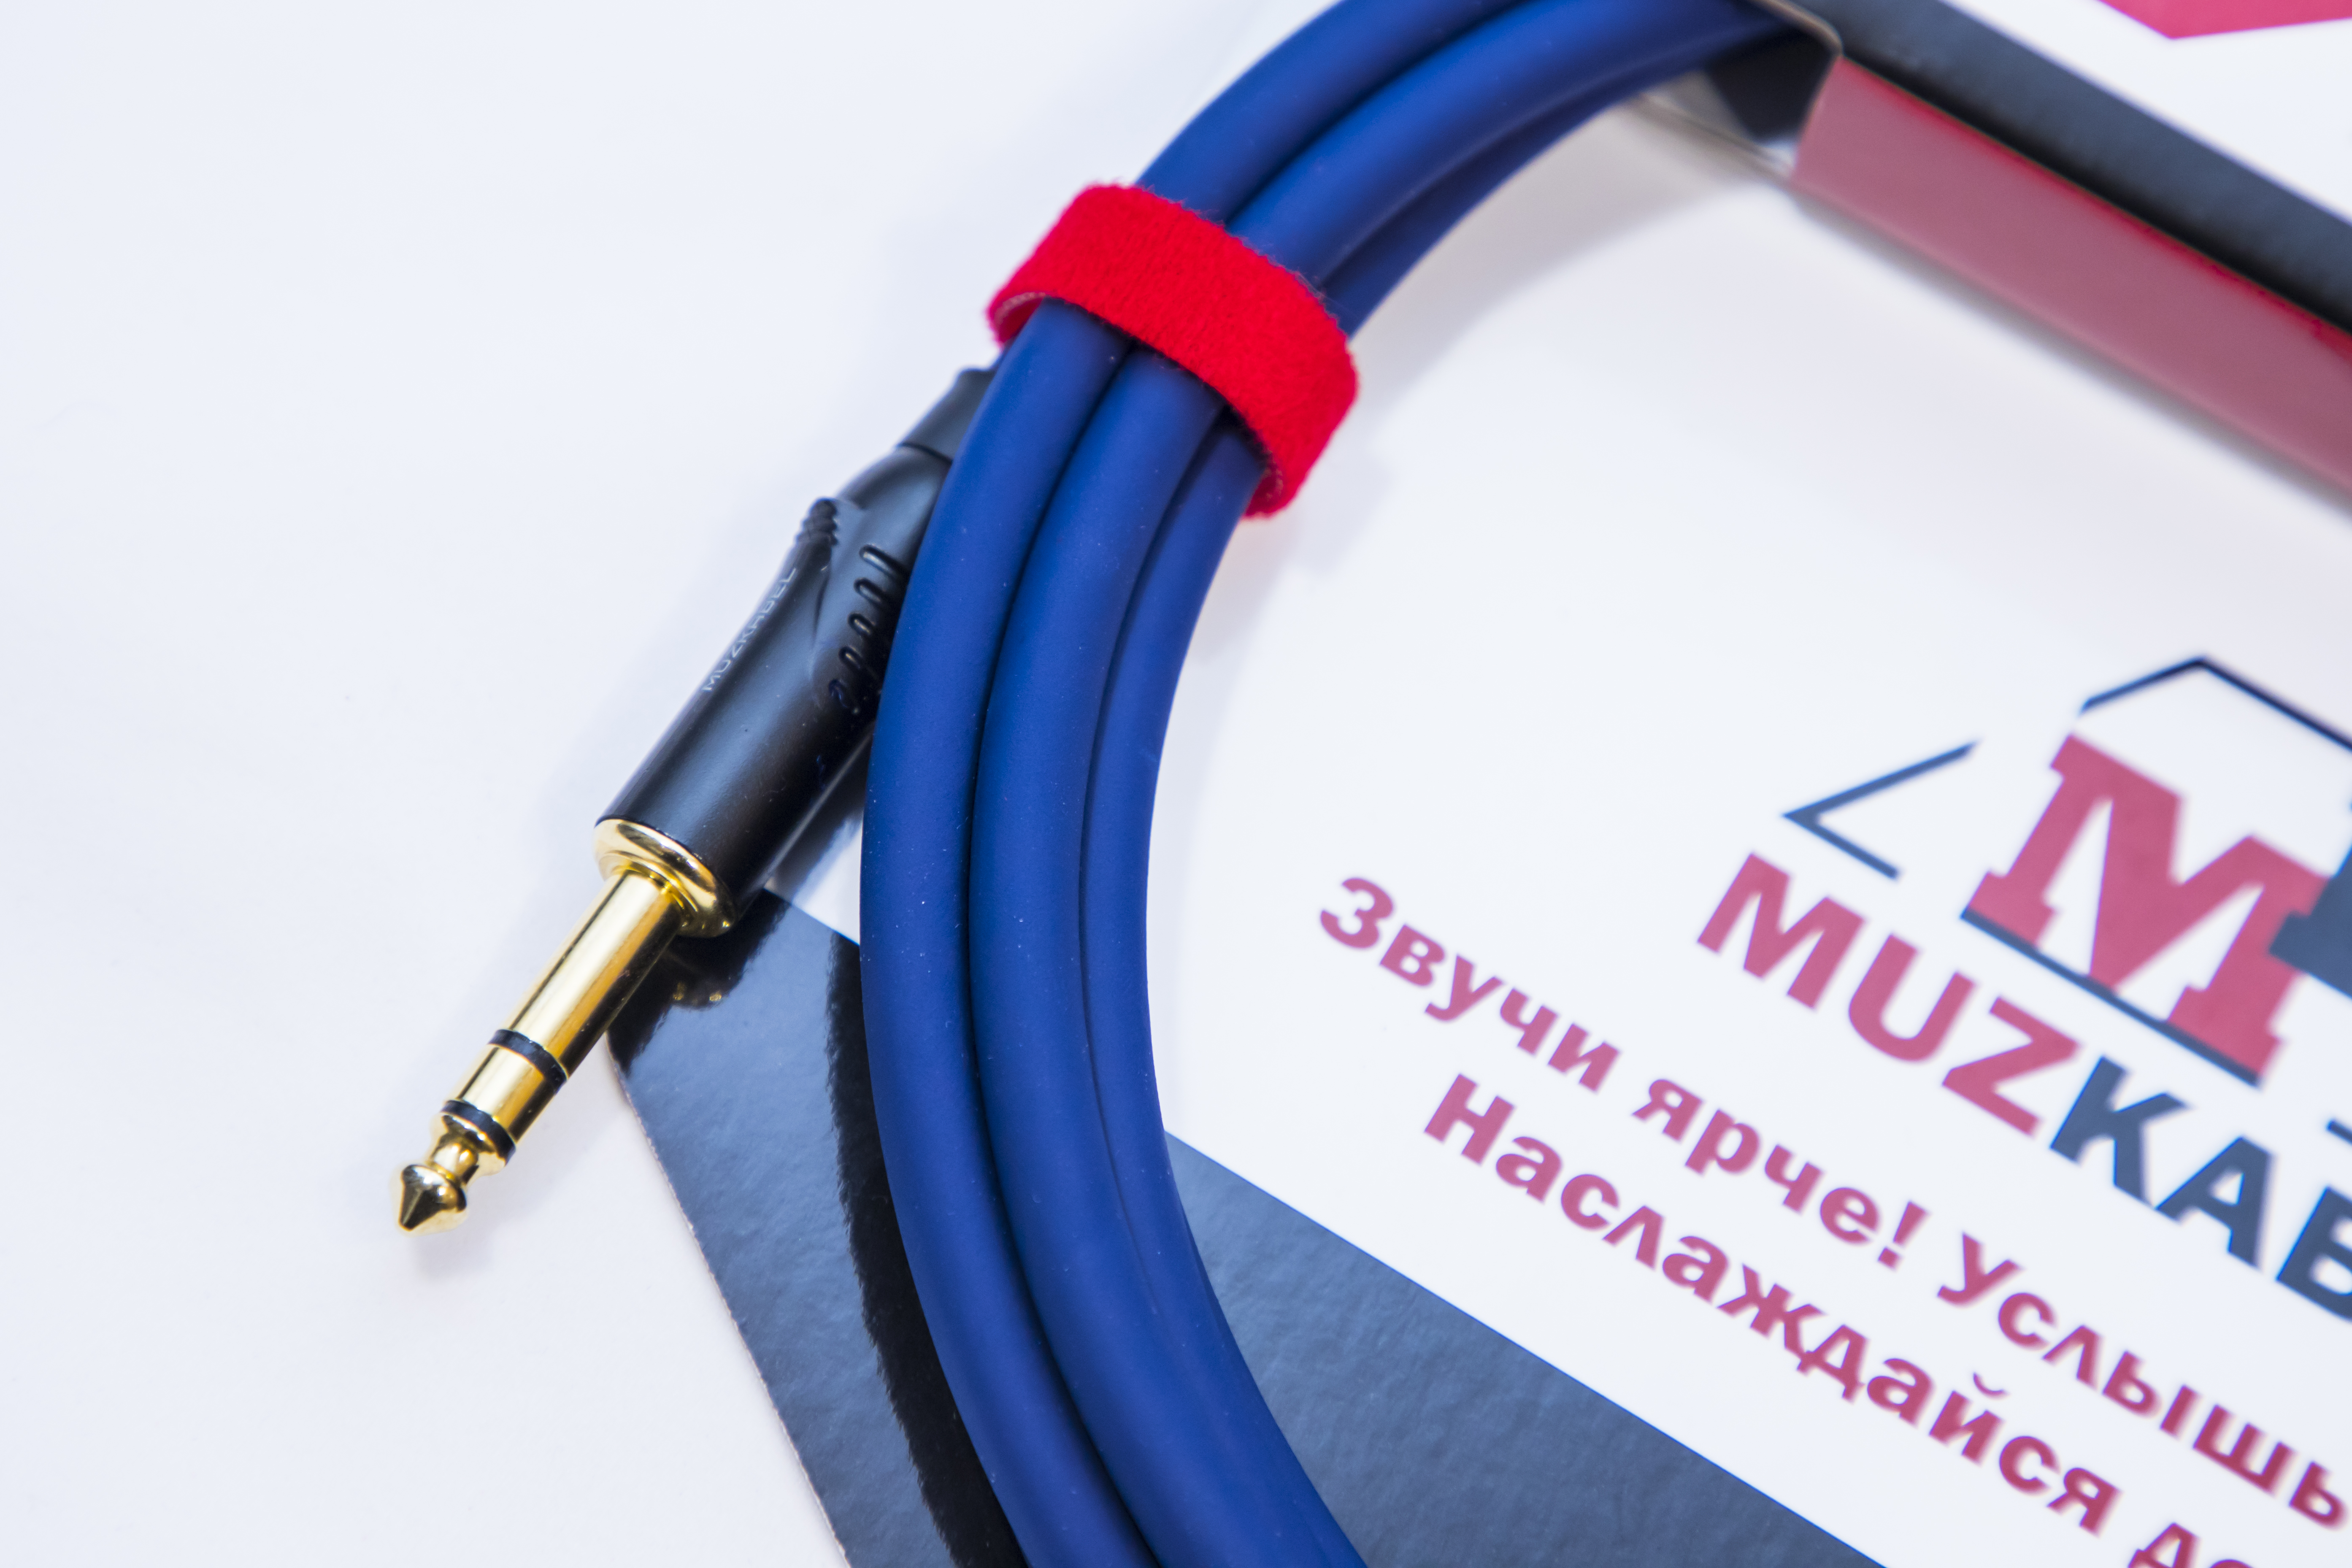 Аудио кабель MUZKABEL BZFMK1S - 8 метров, JACK (стерео) - JACK (стерео)